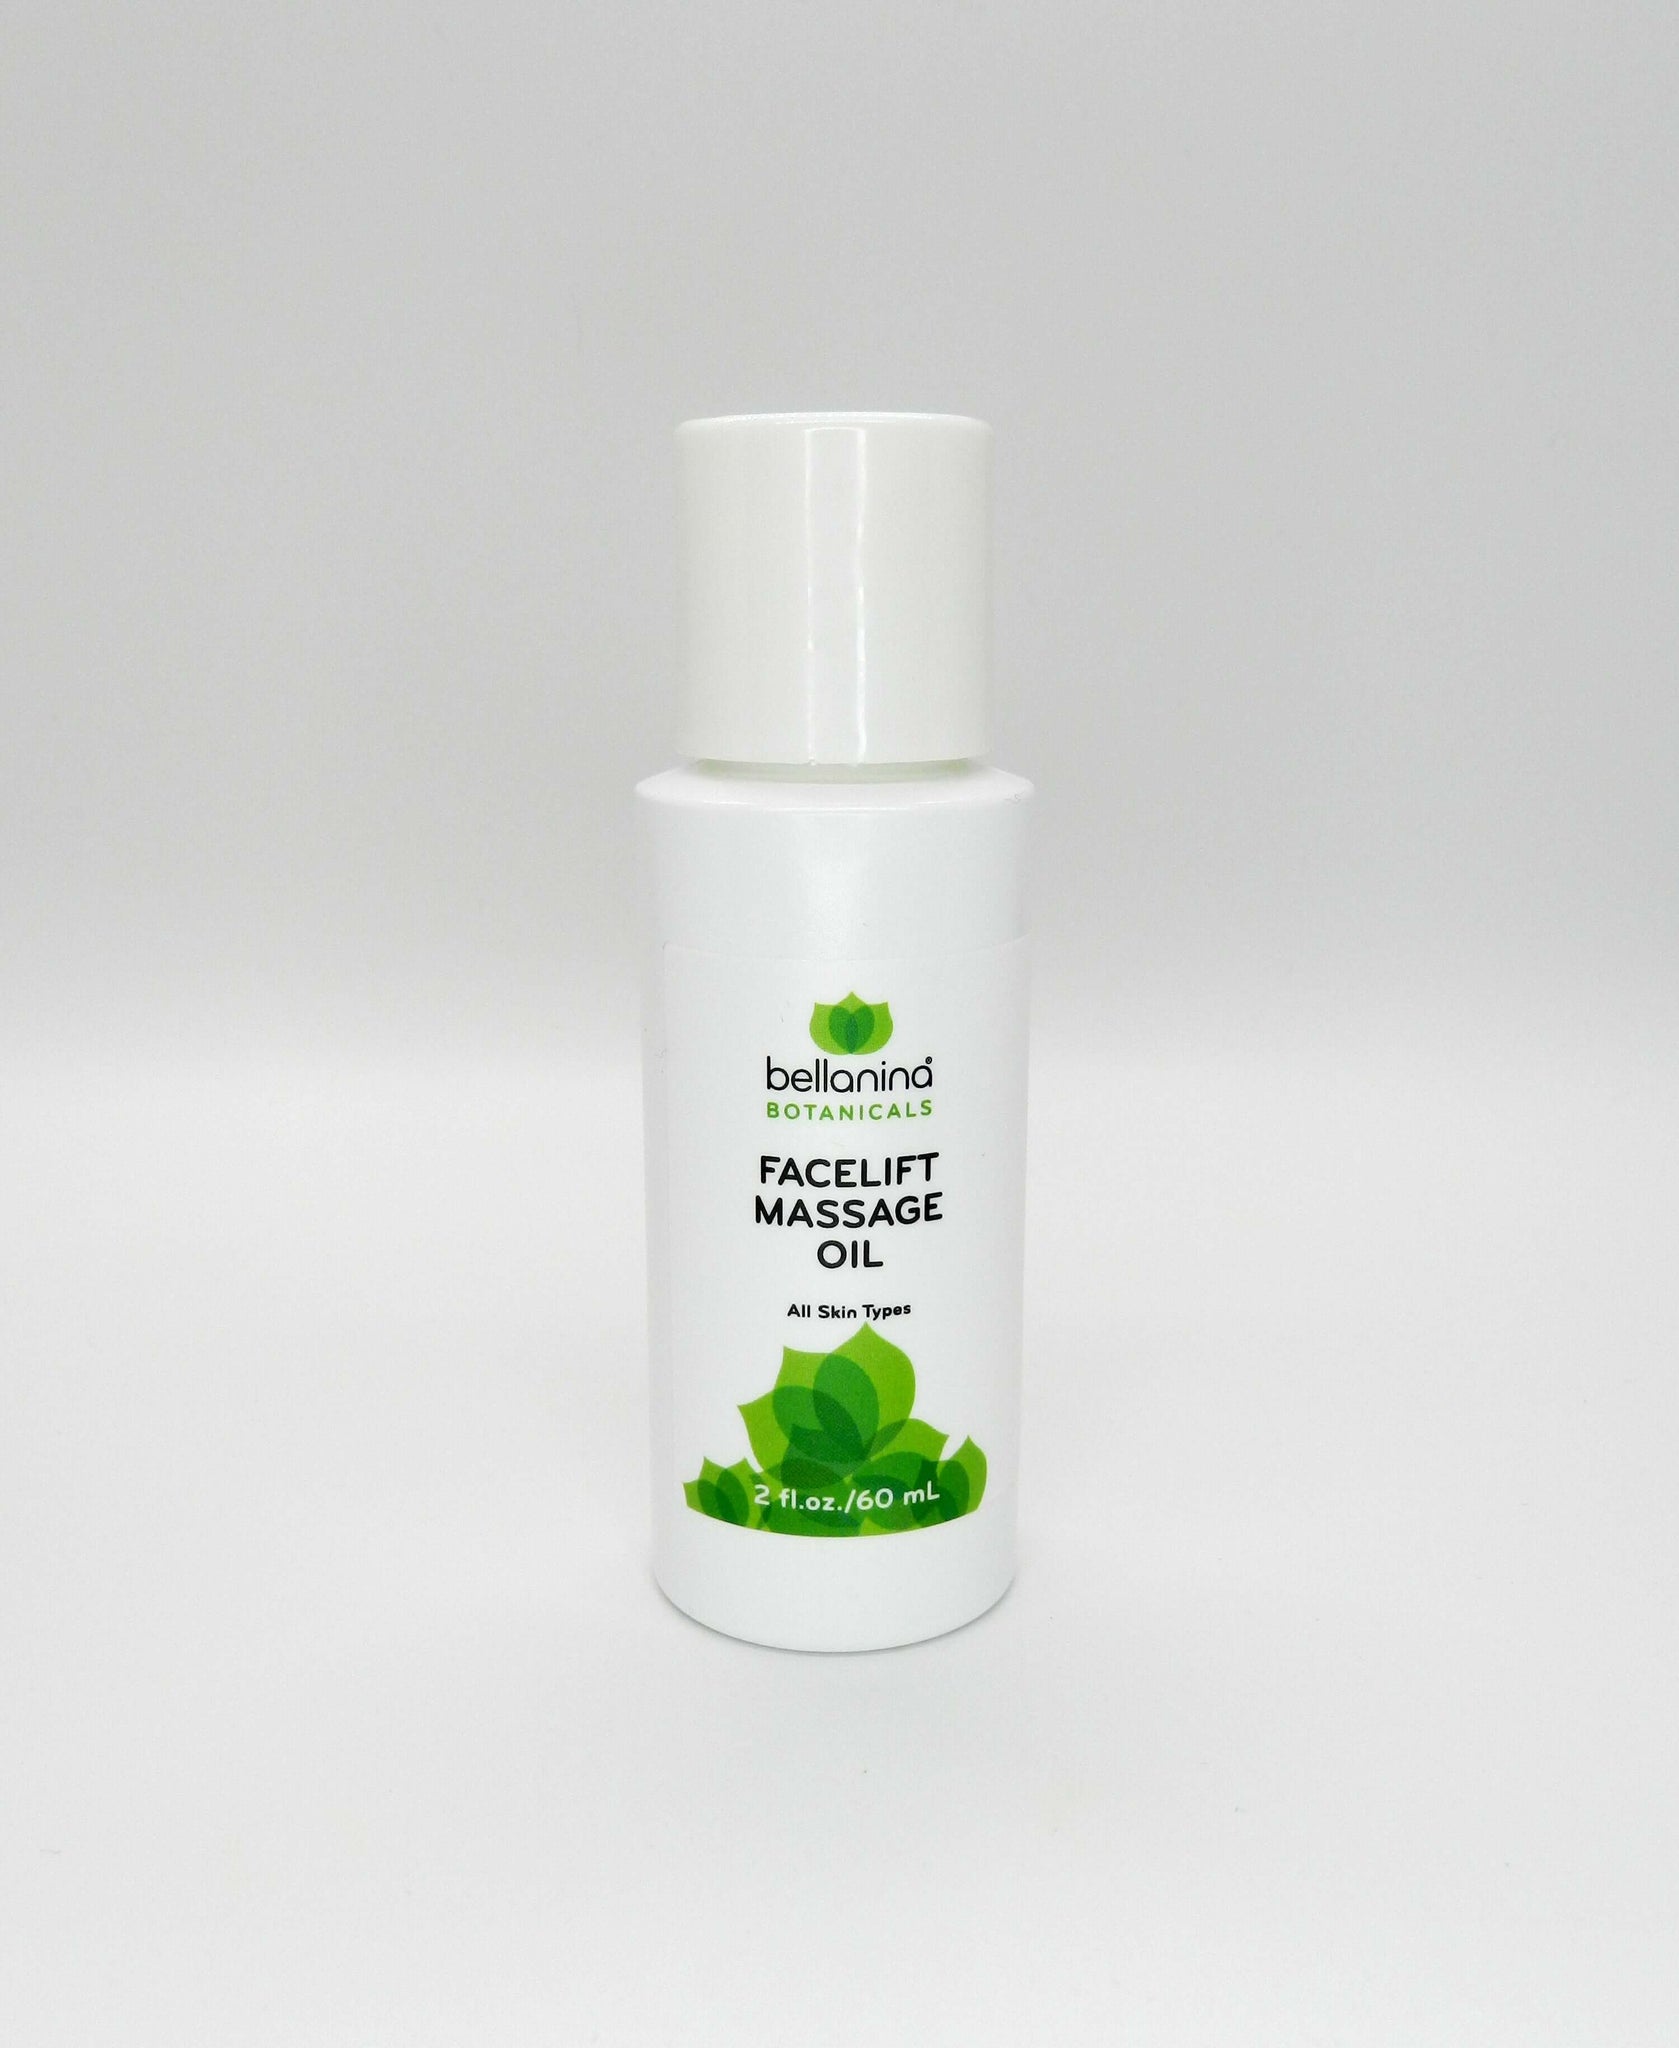 2 oz. bottle of Facelift Massage Oil